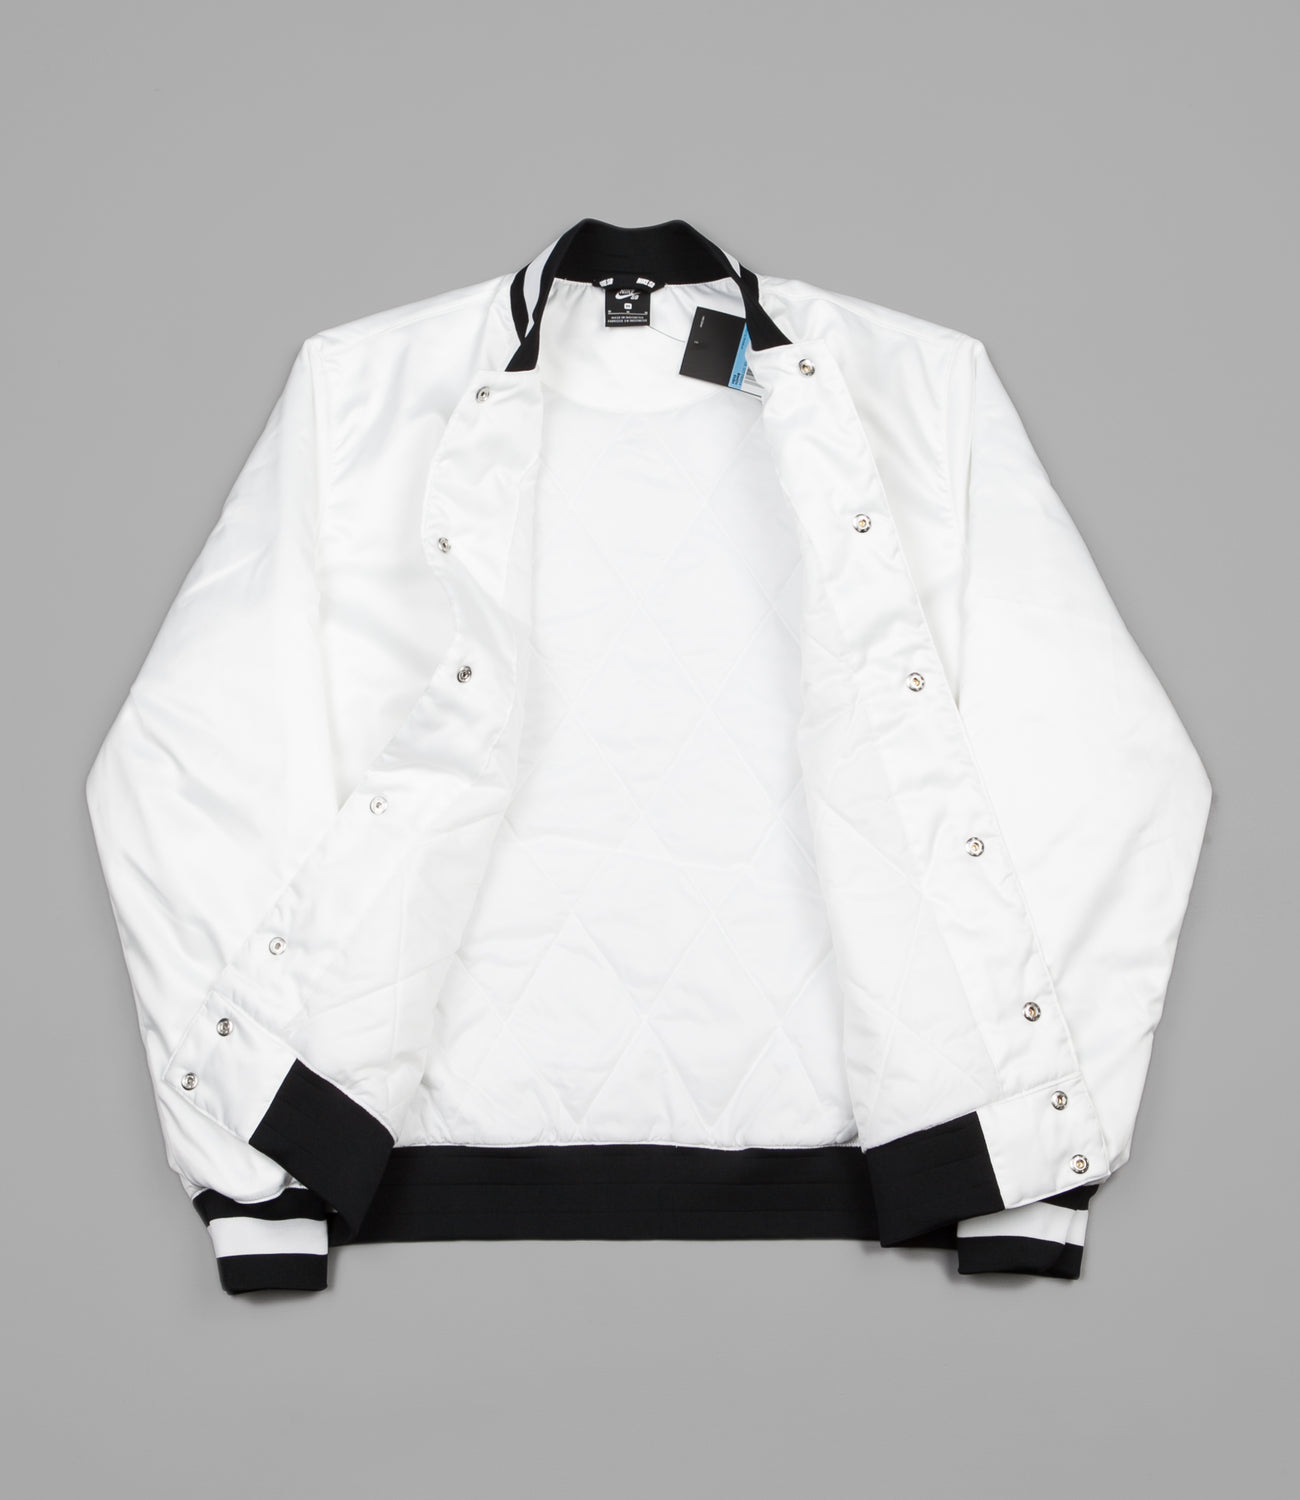 Nike SB NBA Bomber Jacket - White/White